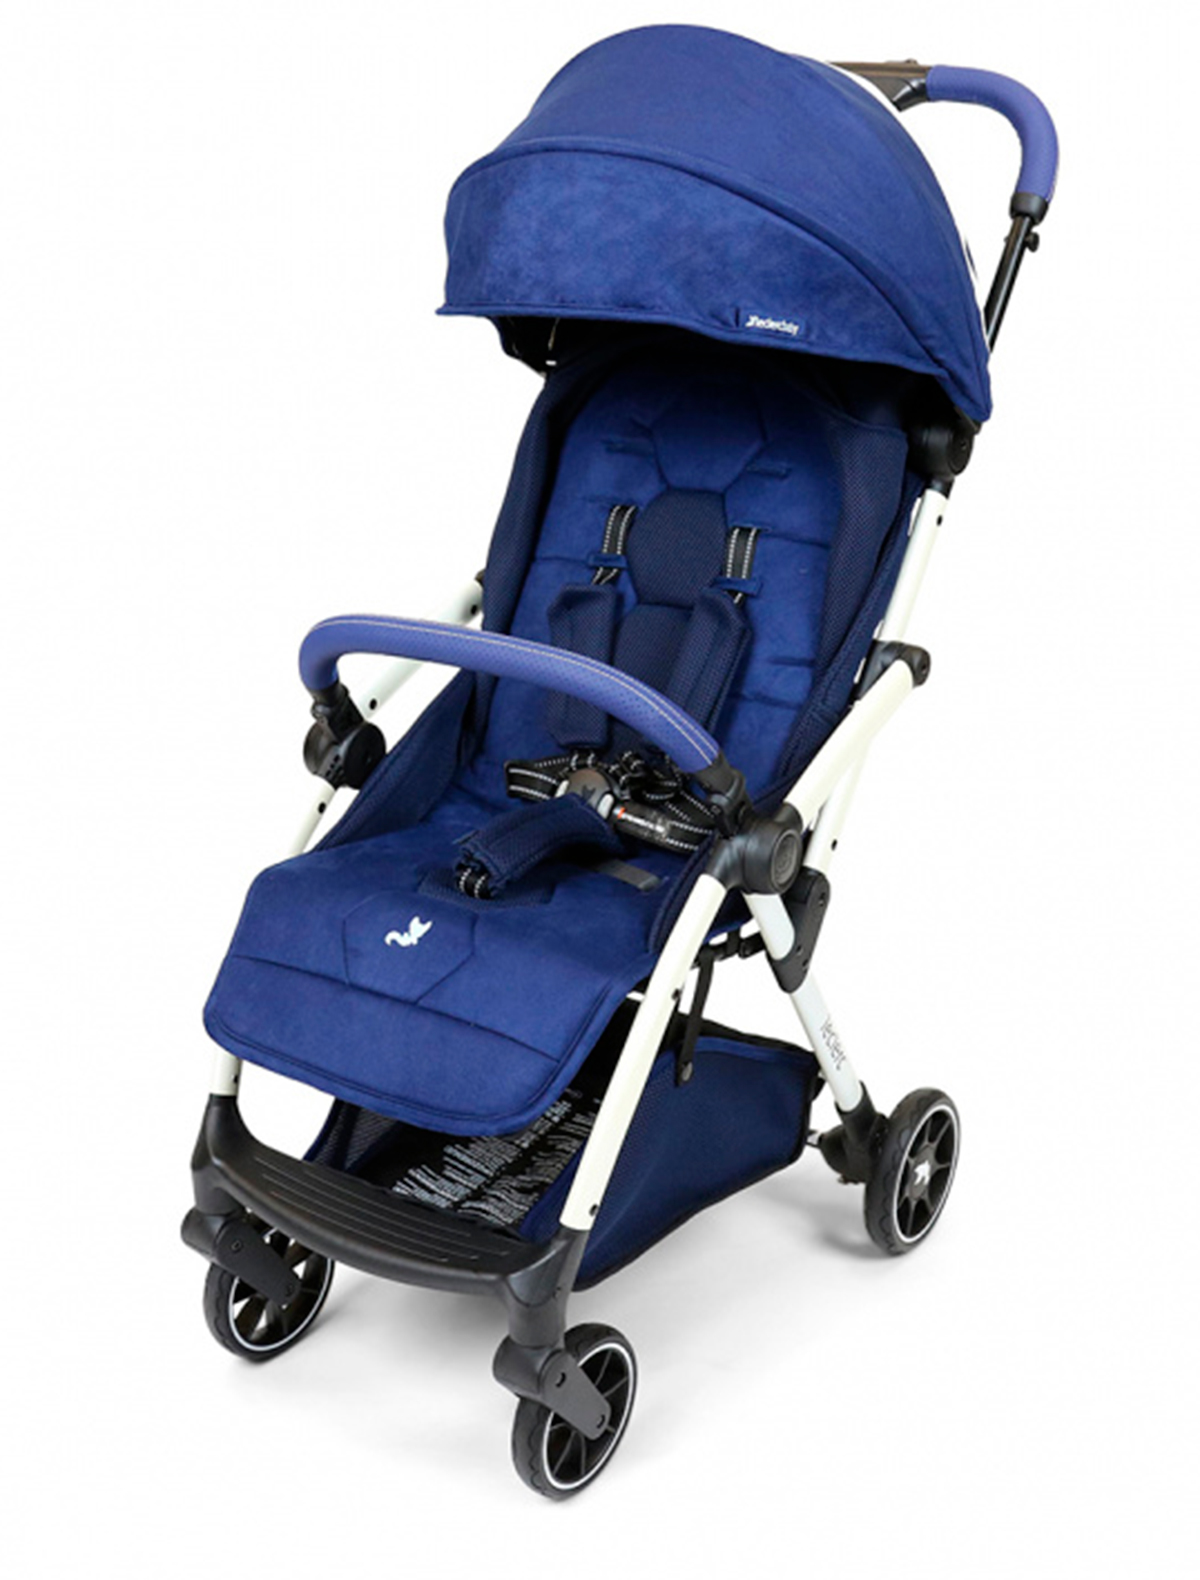 Коляска Leclerc baby 2546569, цвет синий, размер 6 4004529370022 - фото 1